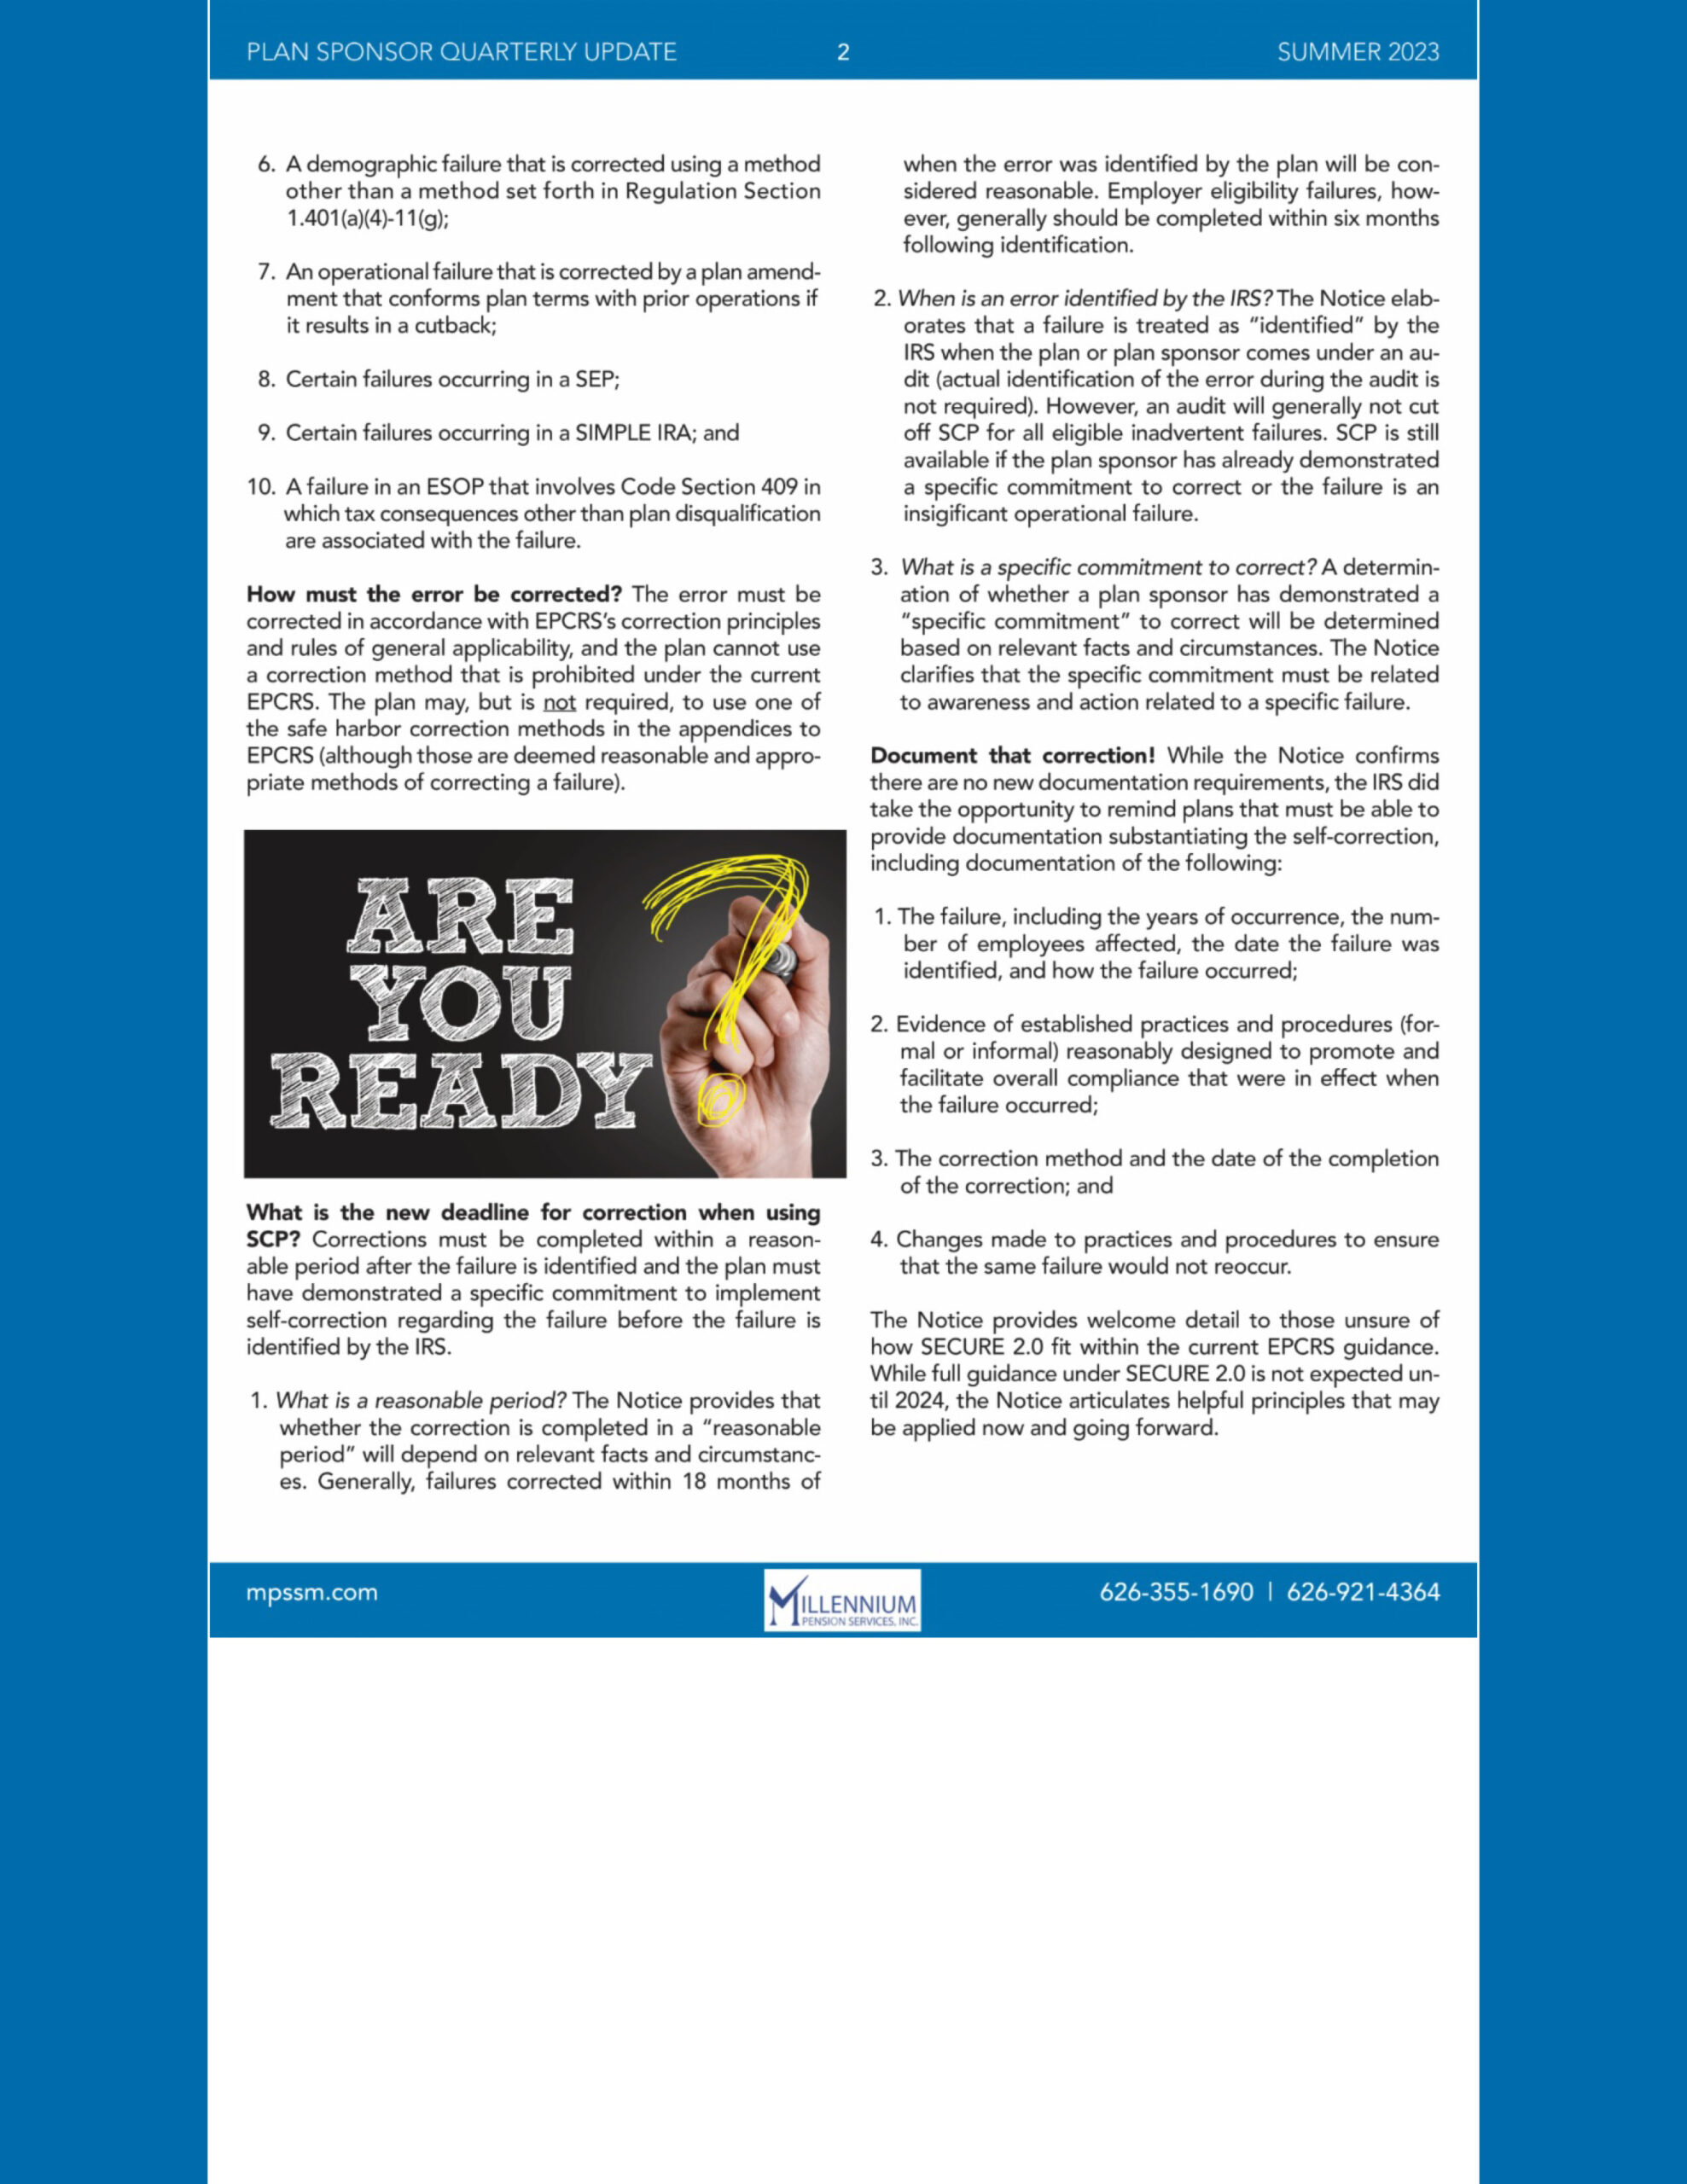 Millennium Pension Services August newsletter page 3